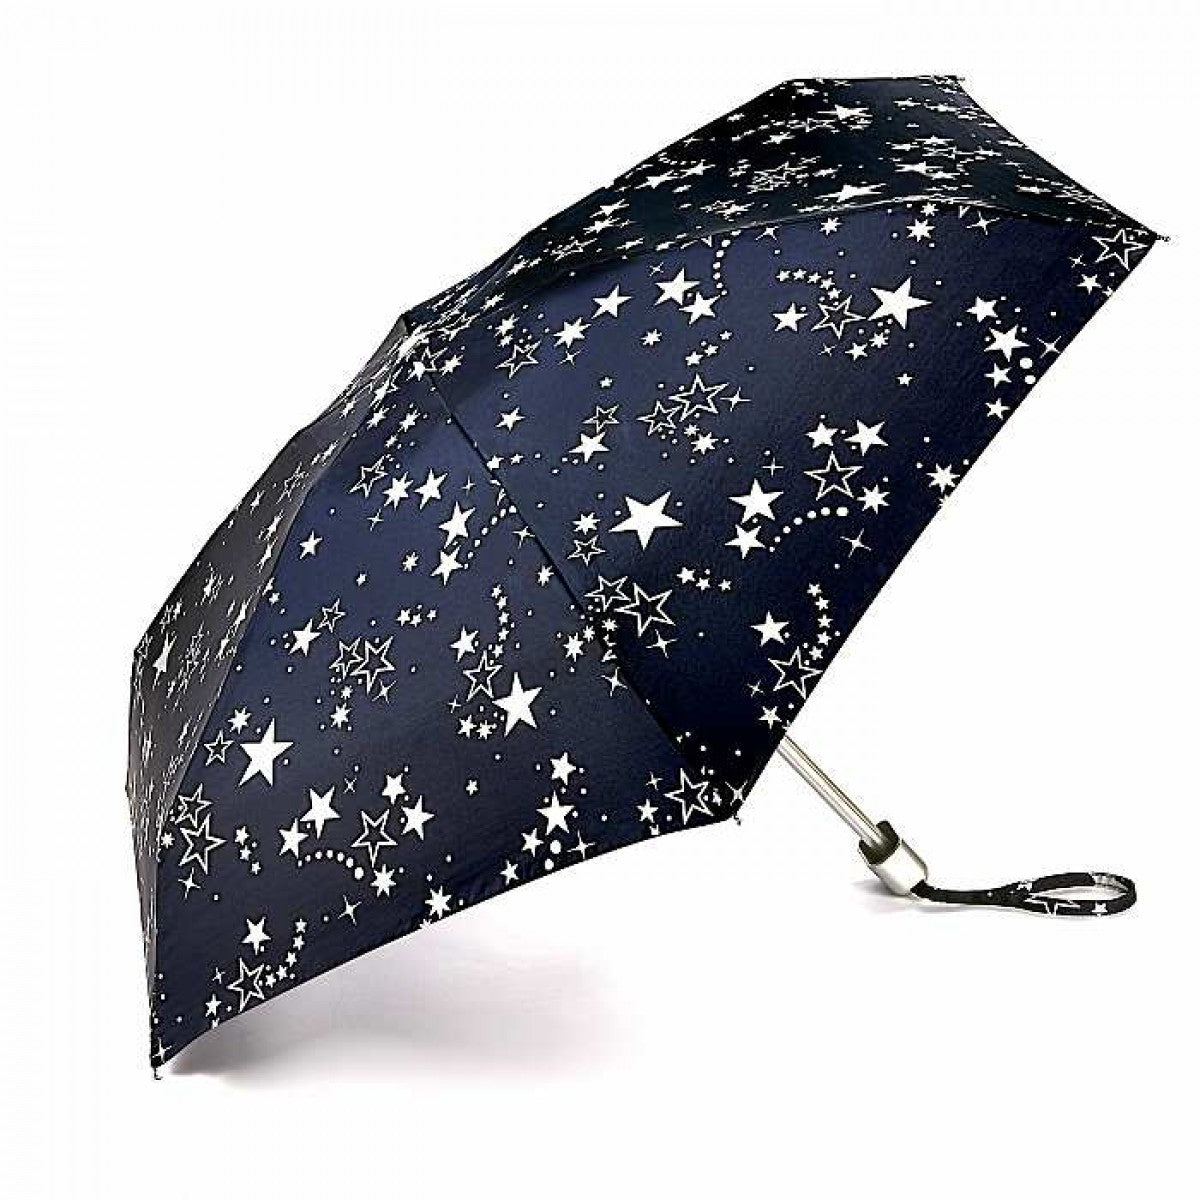 Мини зонт Fulton L501 Tiny-2 Night Sky (Ночное небо)